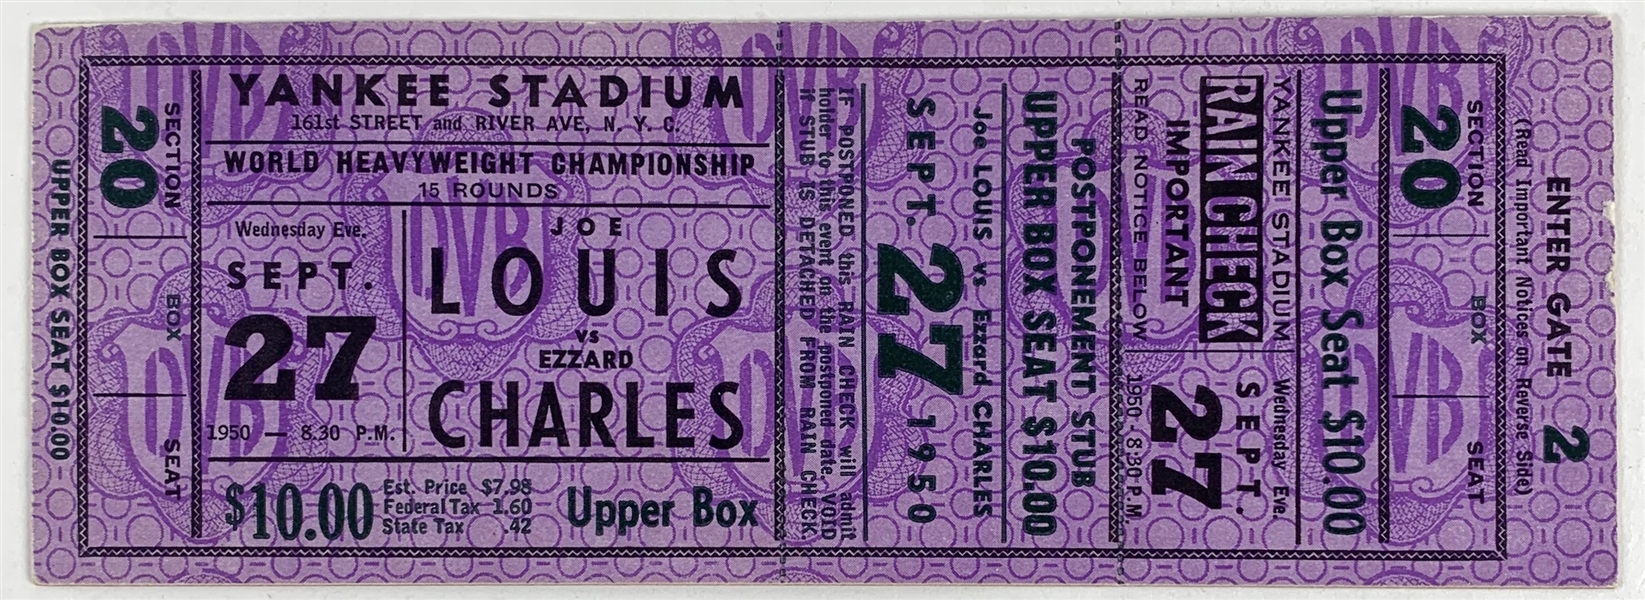 Joe Louis vs. Ezzard Charles Original Full On-Site Ticket :: 9/27/1950 @ Yankee Stadium